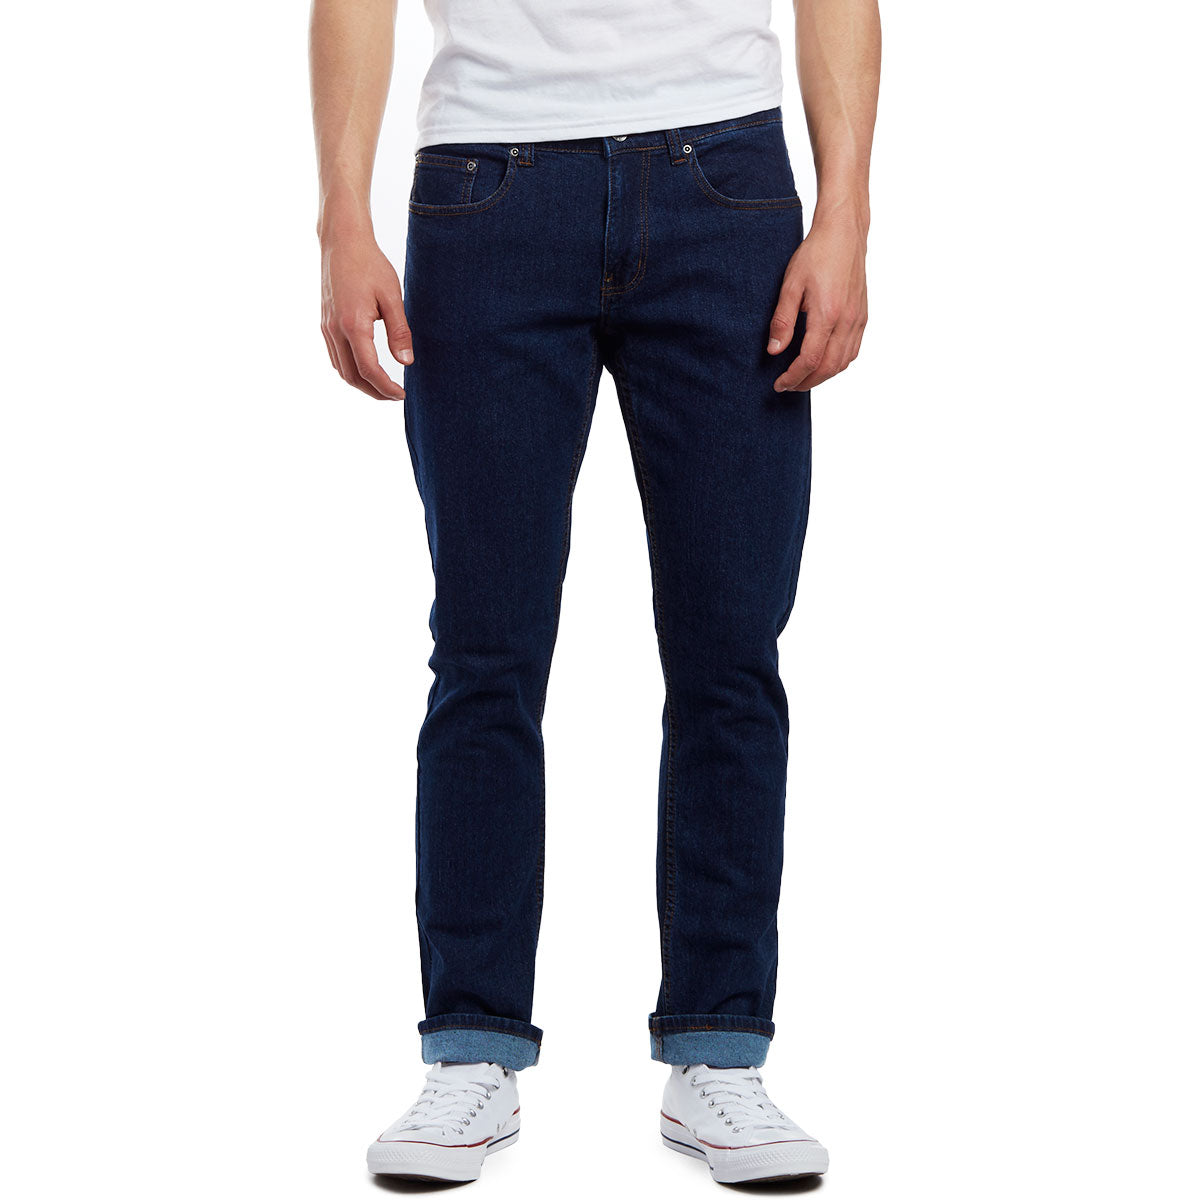 CCS Slim Fit Jeans - Dark Rinse image 2